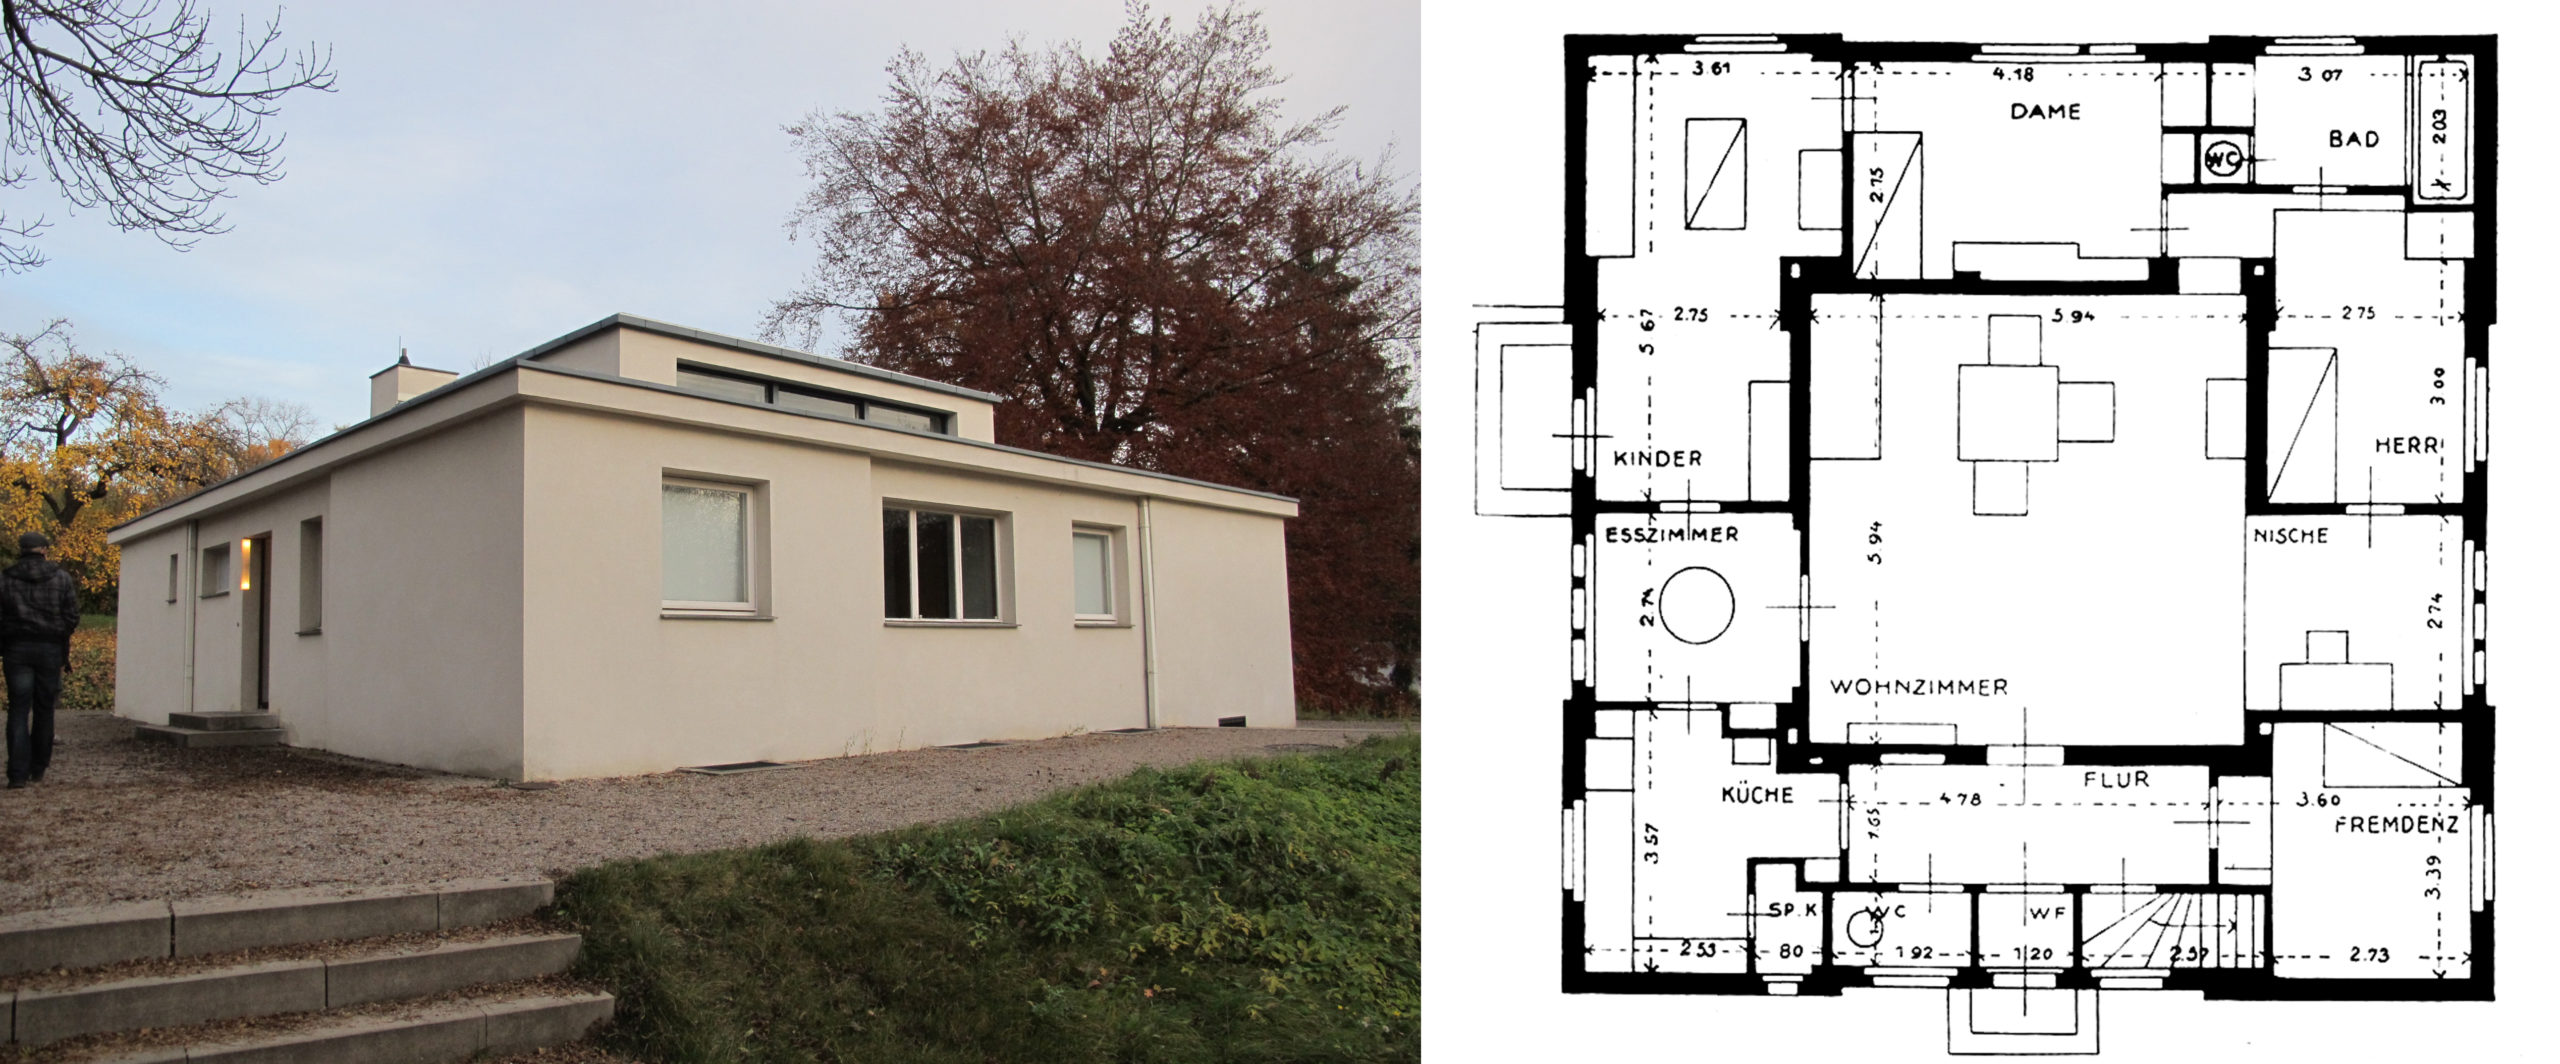 Left: Haus am Horn exterior (photo: Sailko, CC BY-SA 3.0). Right: Georg Muche, Haus am Horn plan (image: socks-studio, CC BY-SA 3.0)